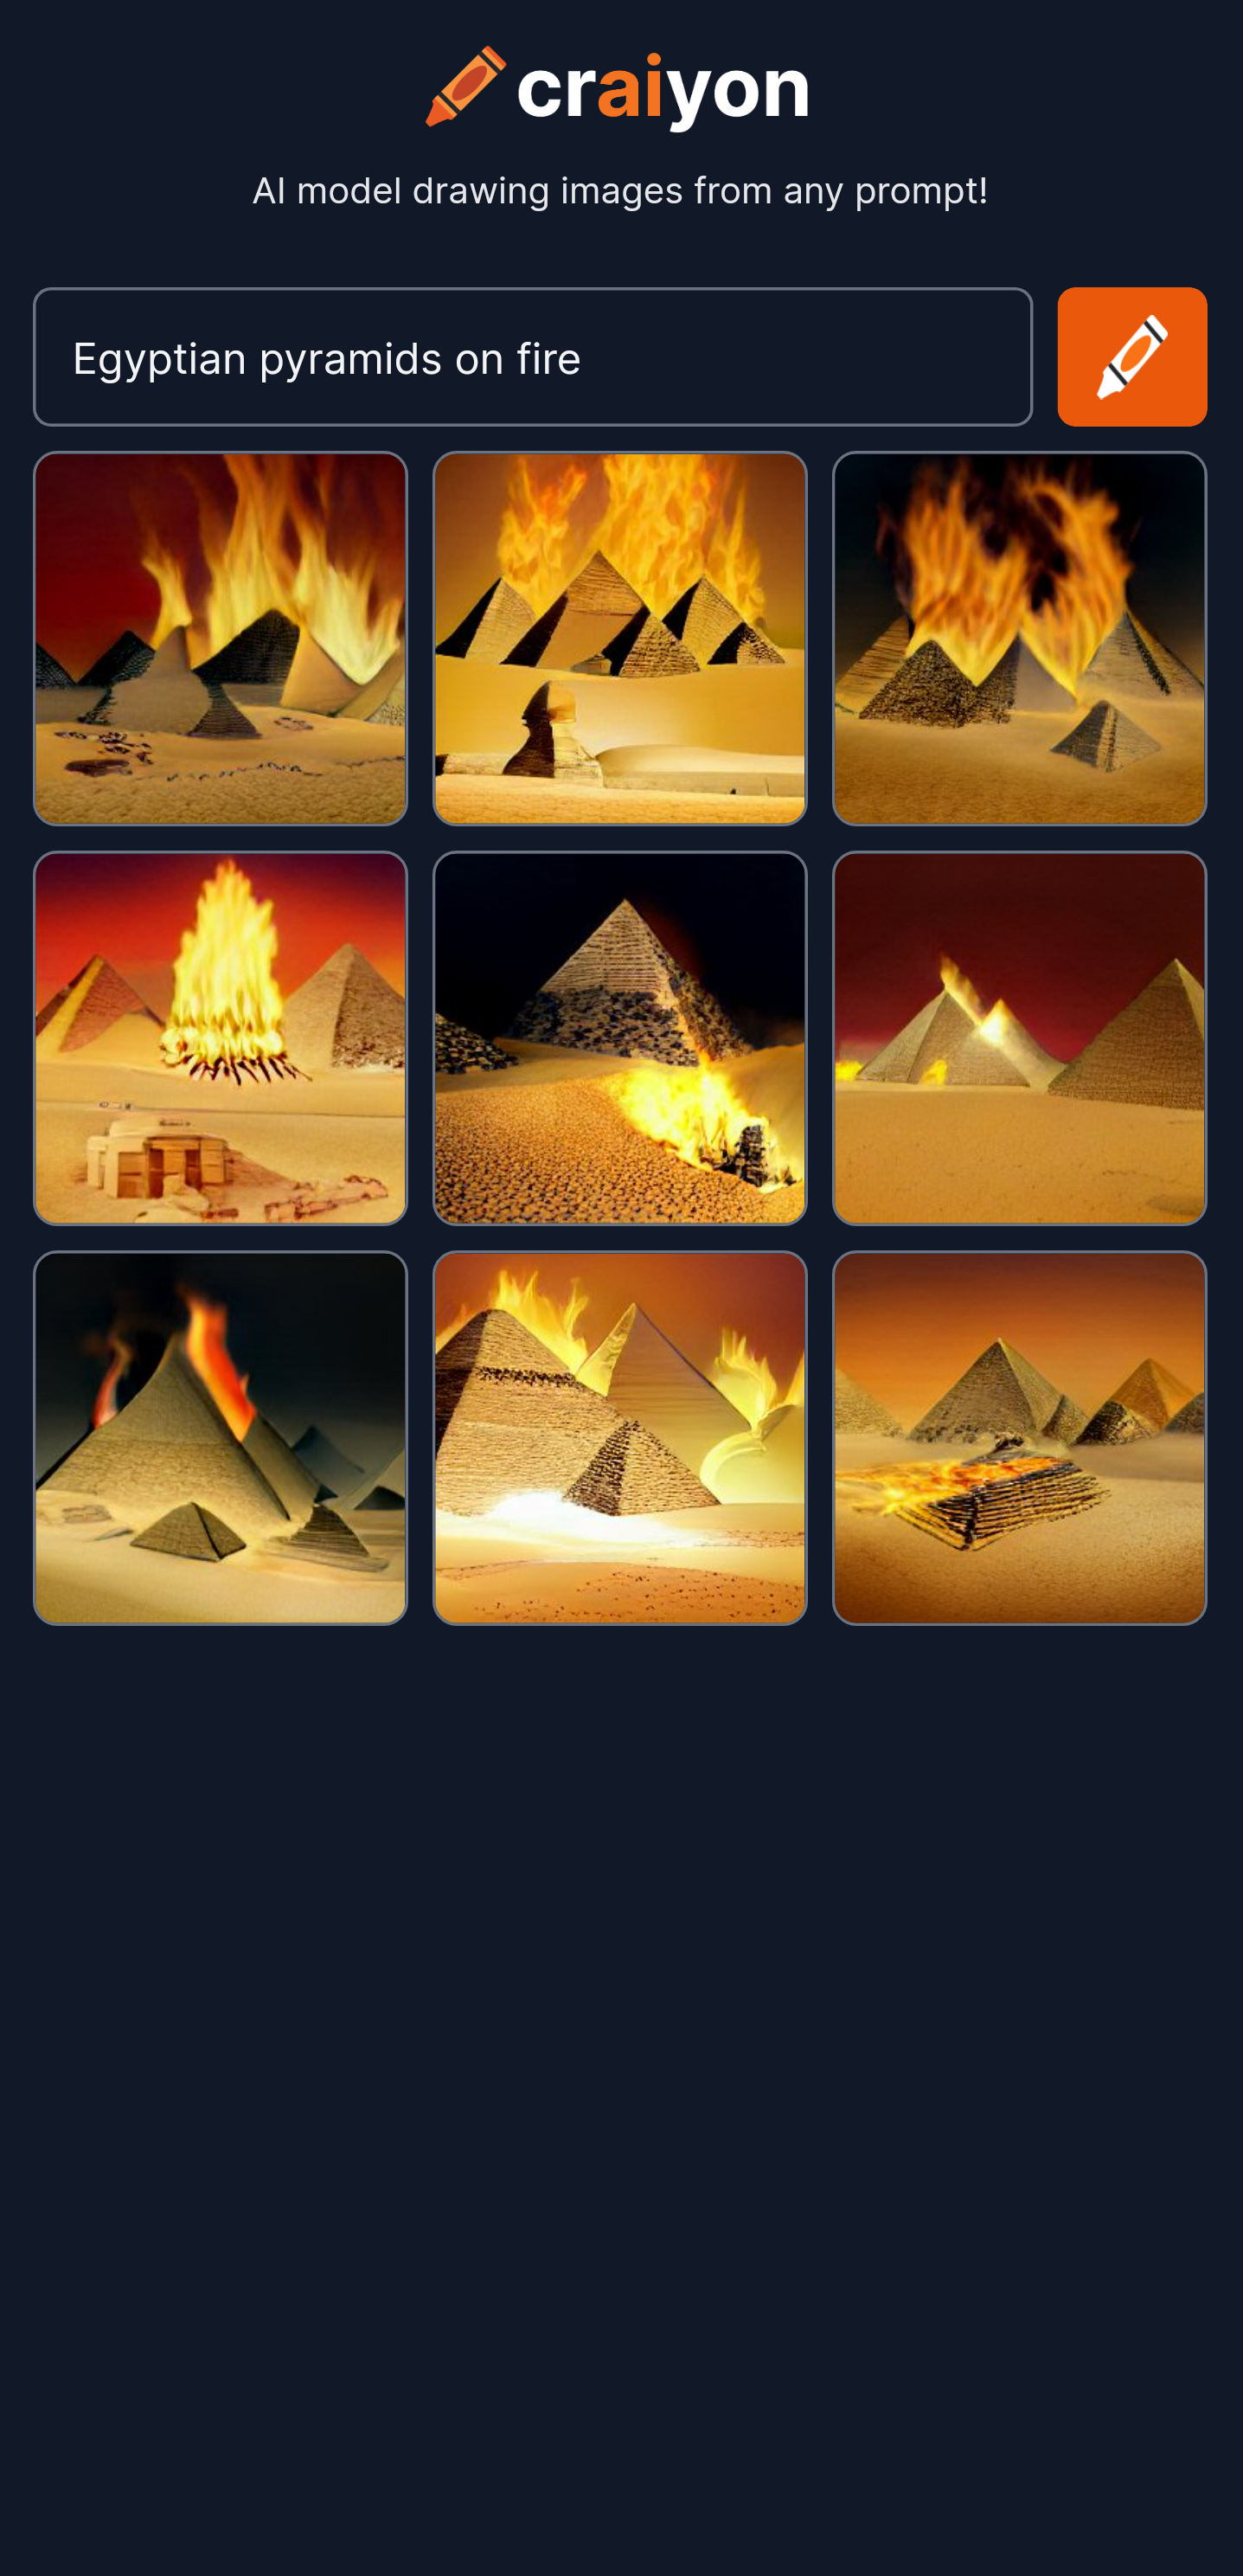 craiyon_020903_Egyptian_pyramids_on_fire.jpg.png